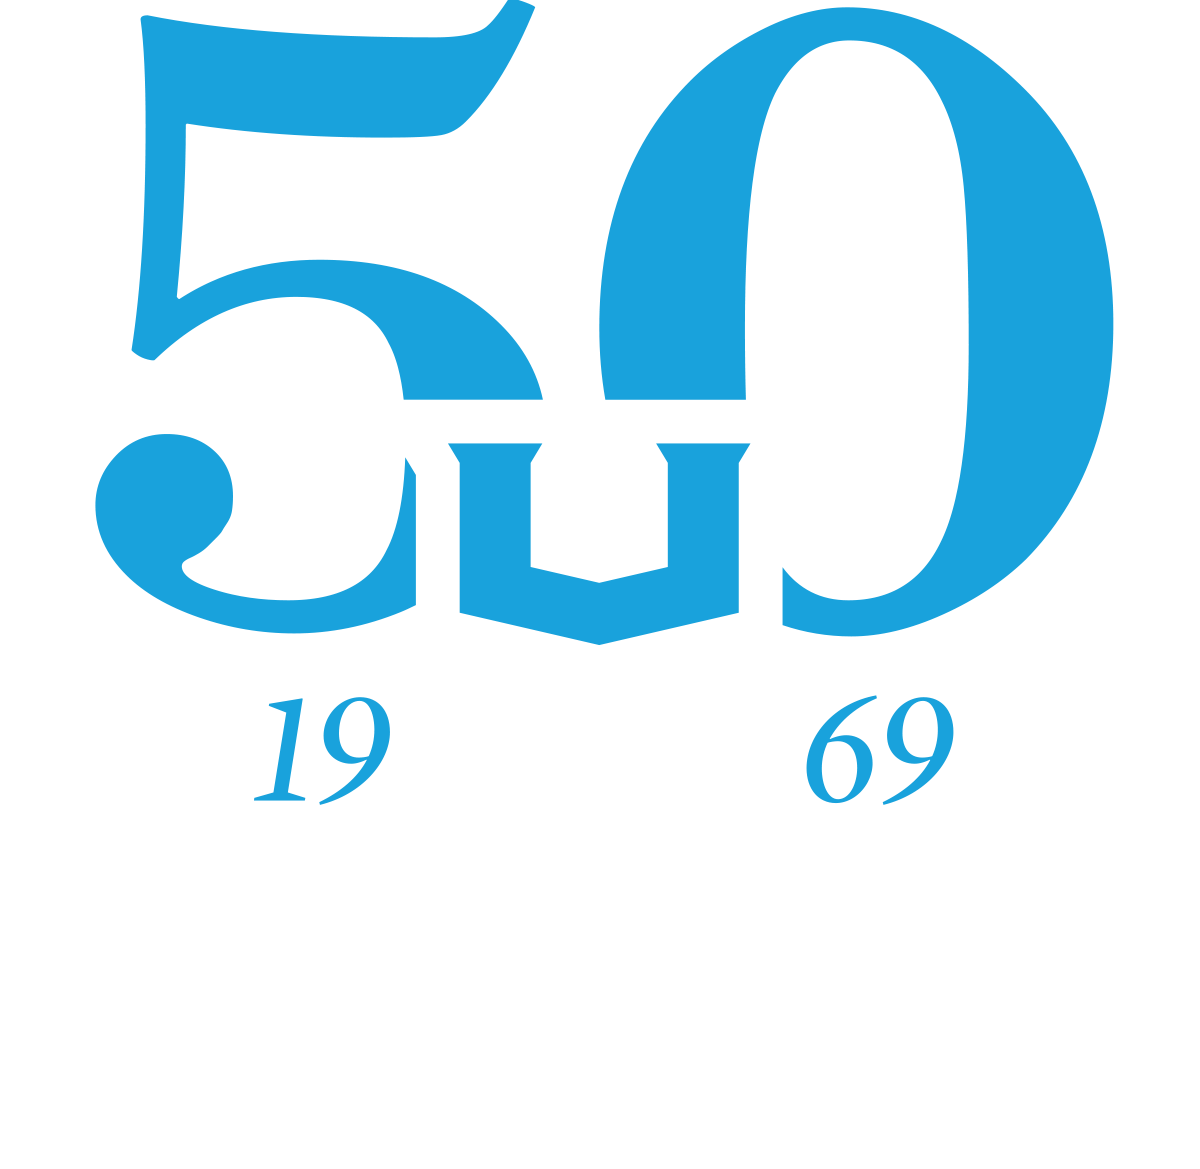 Hallmark University 50th Anniversary Logo